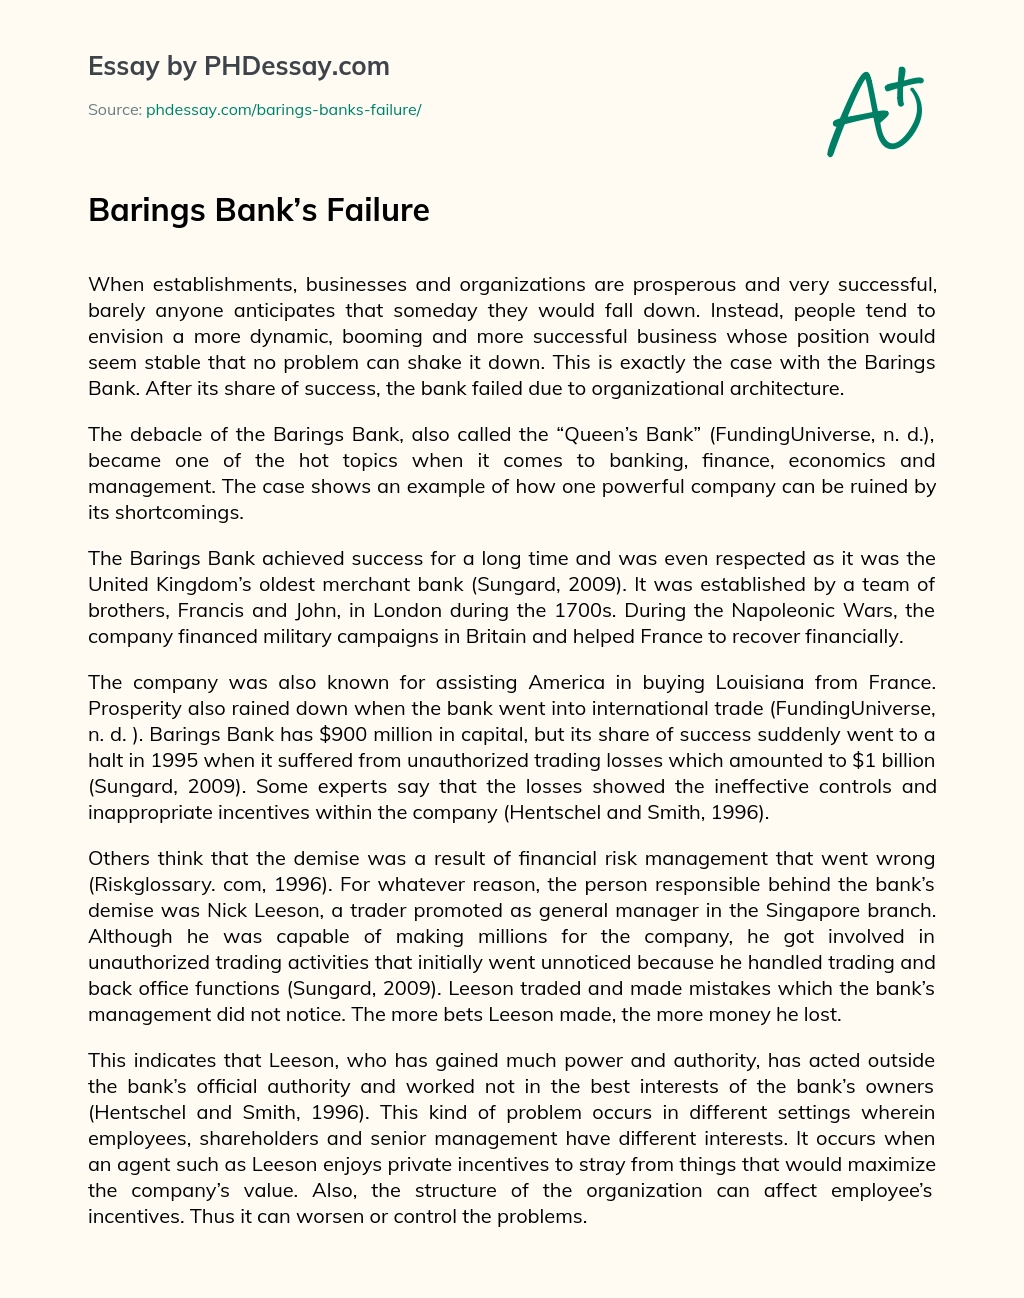 Barings Bank’s Failure essay